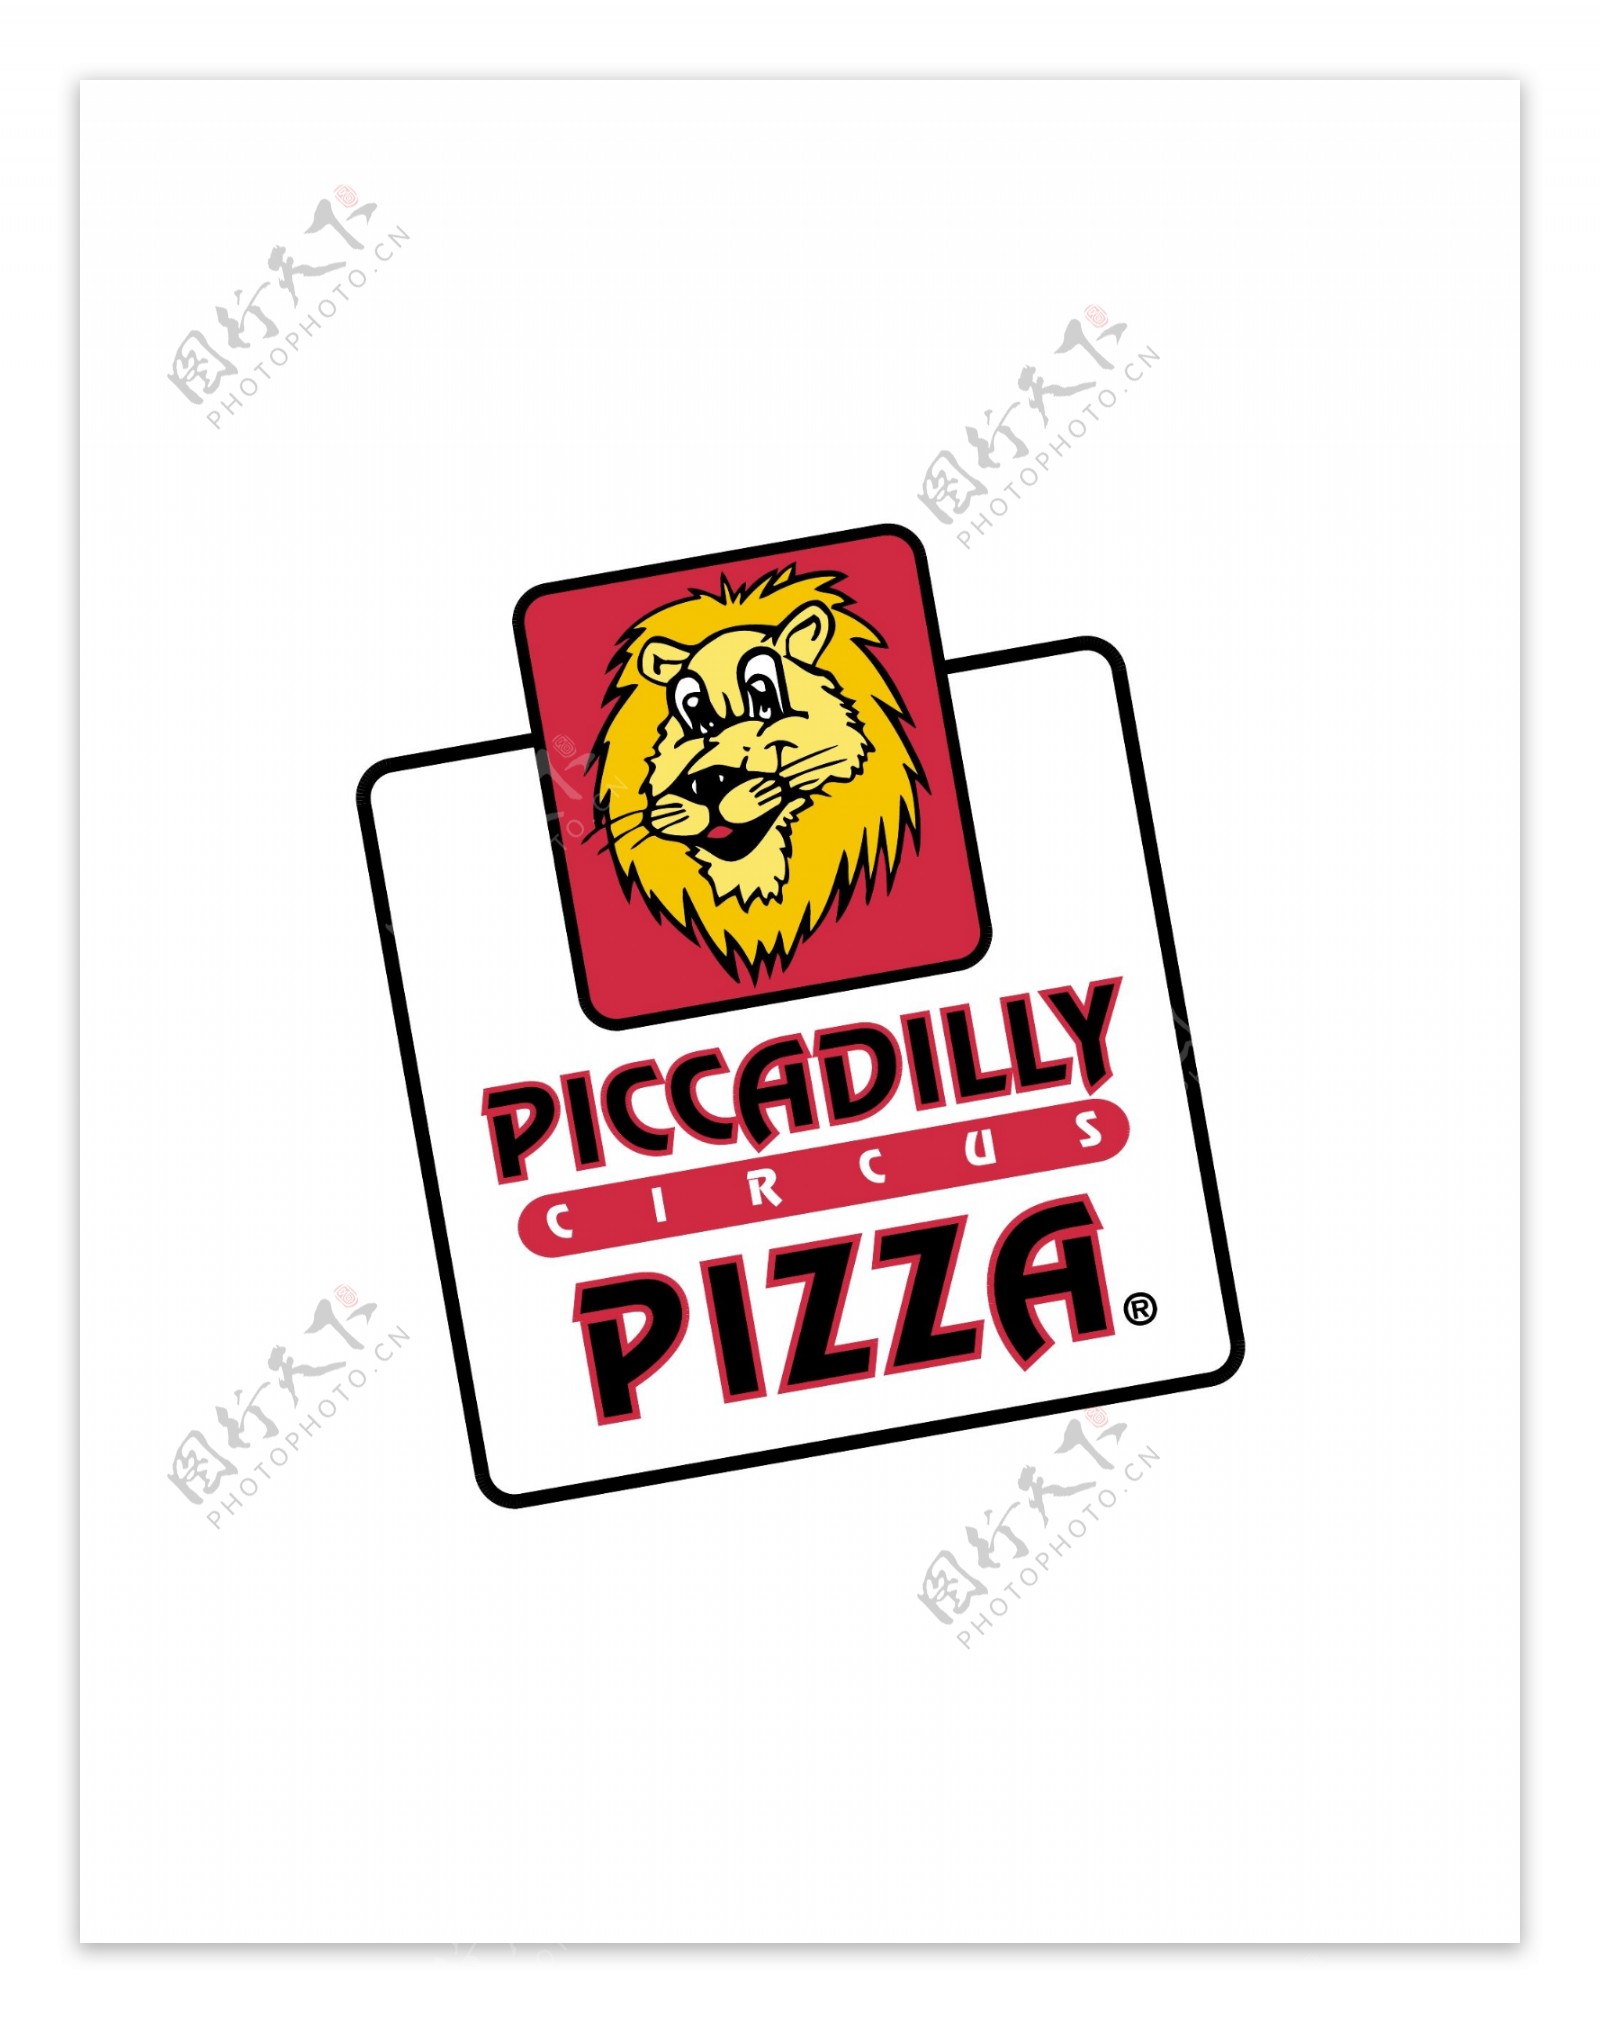 PiccadillyCircusPizzalogo设计欣赏PiccadillyCircusPizza饮料品牌LOGO下载标志设计欣赏